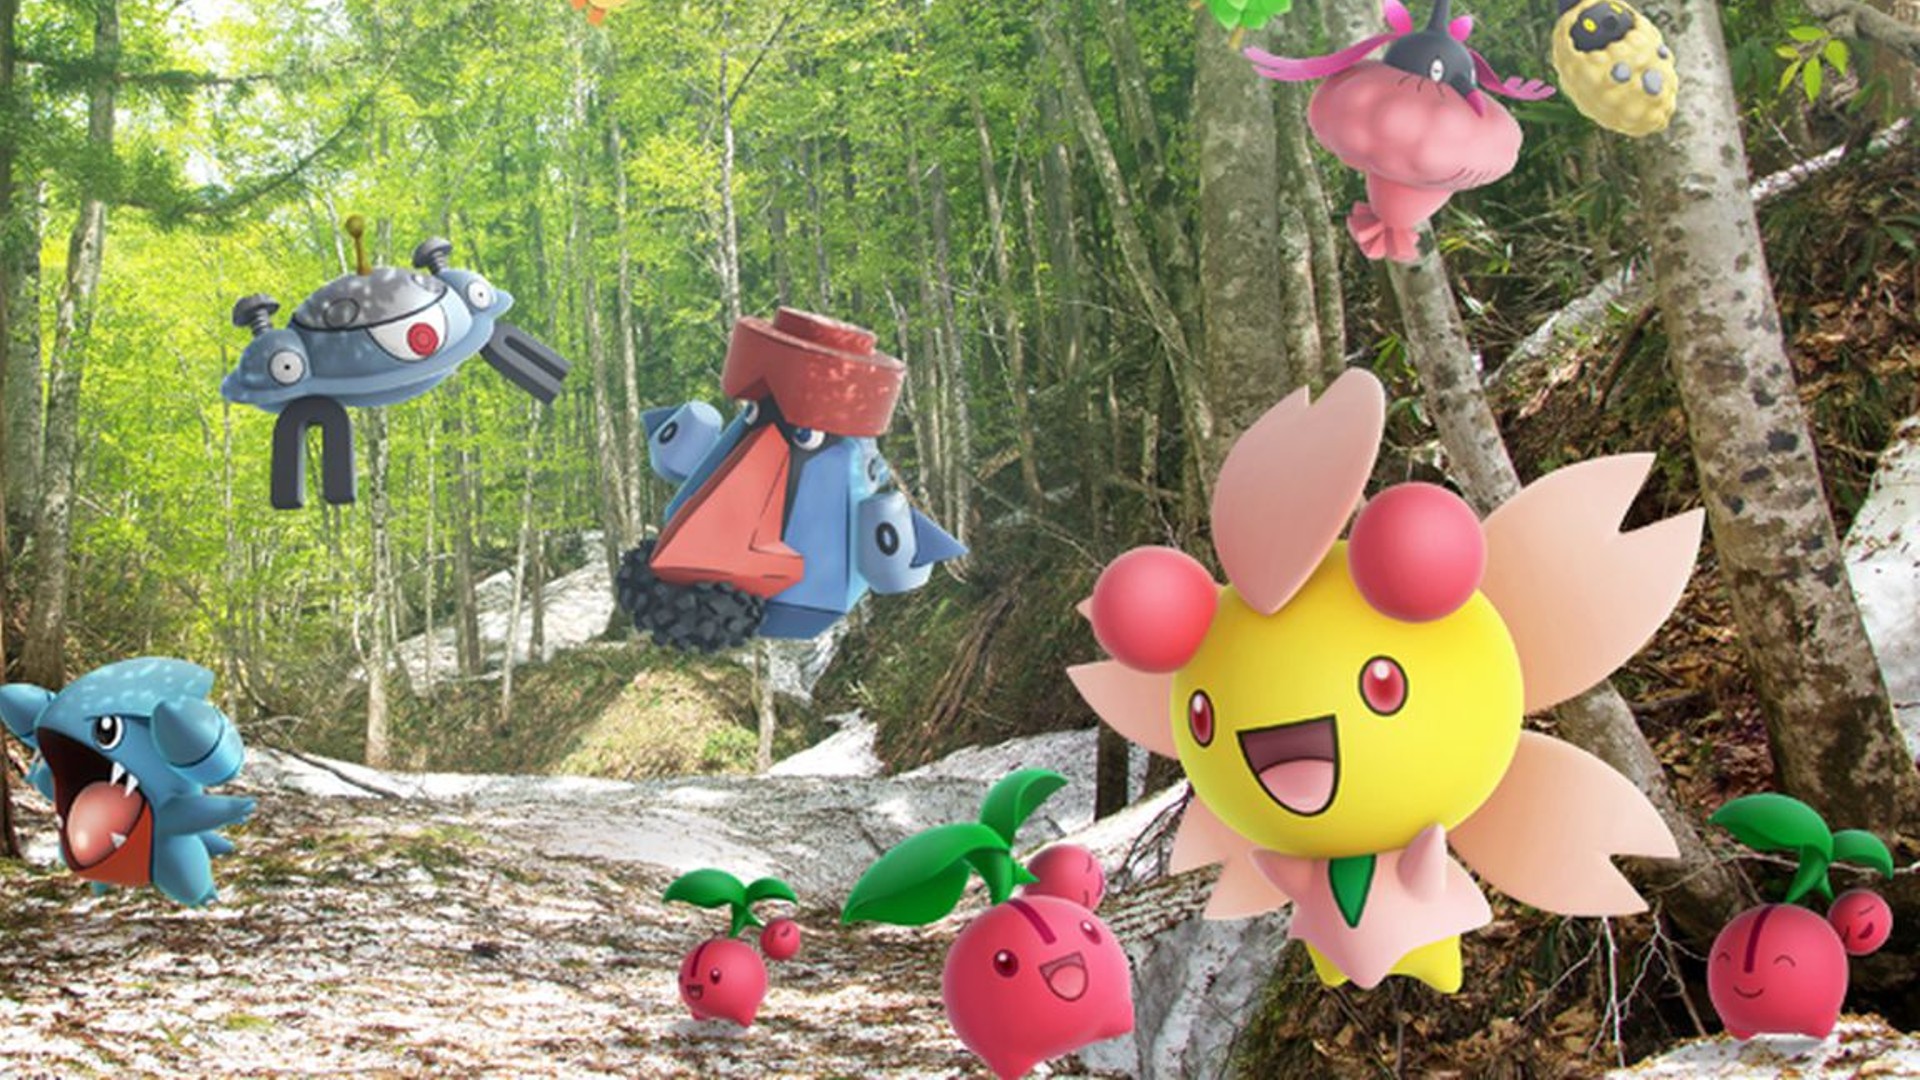 How to get Shaymin in Pokémon Go, Sustainability Week explained